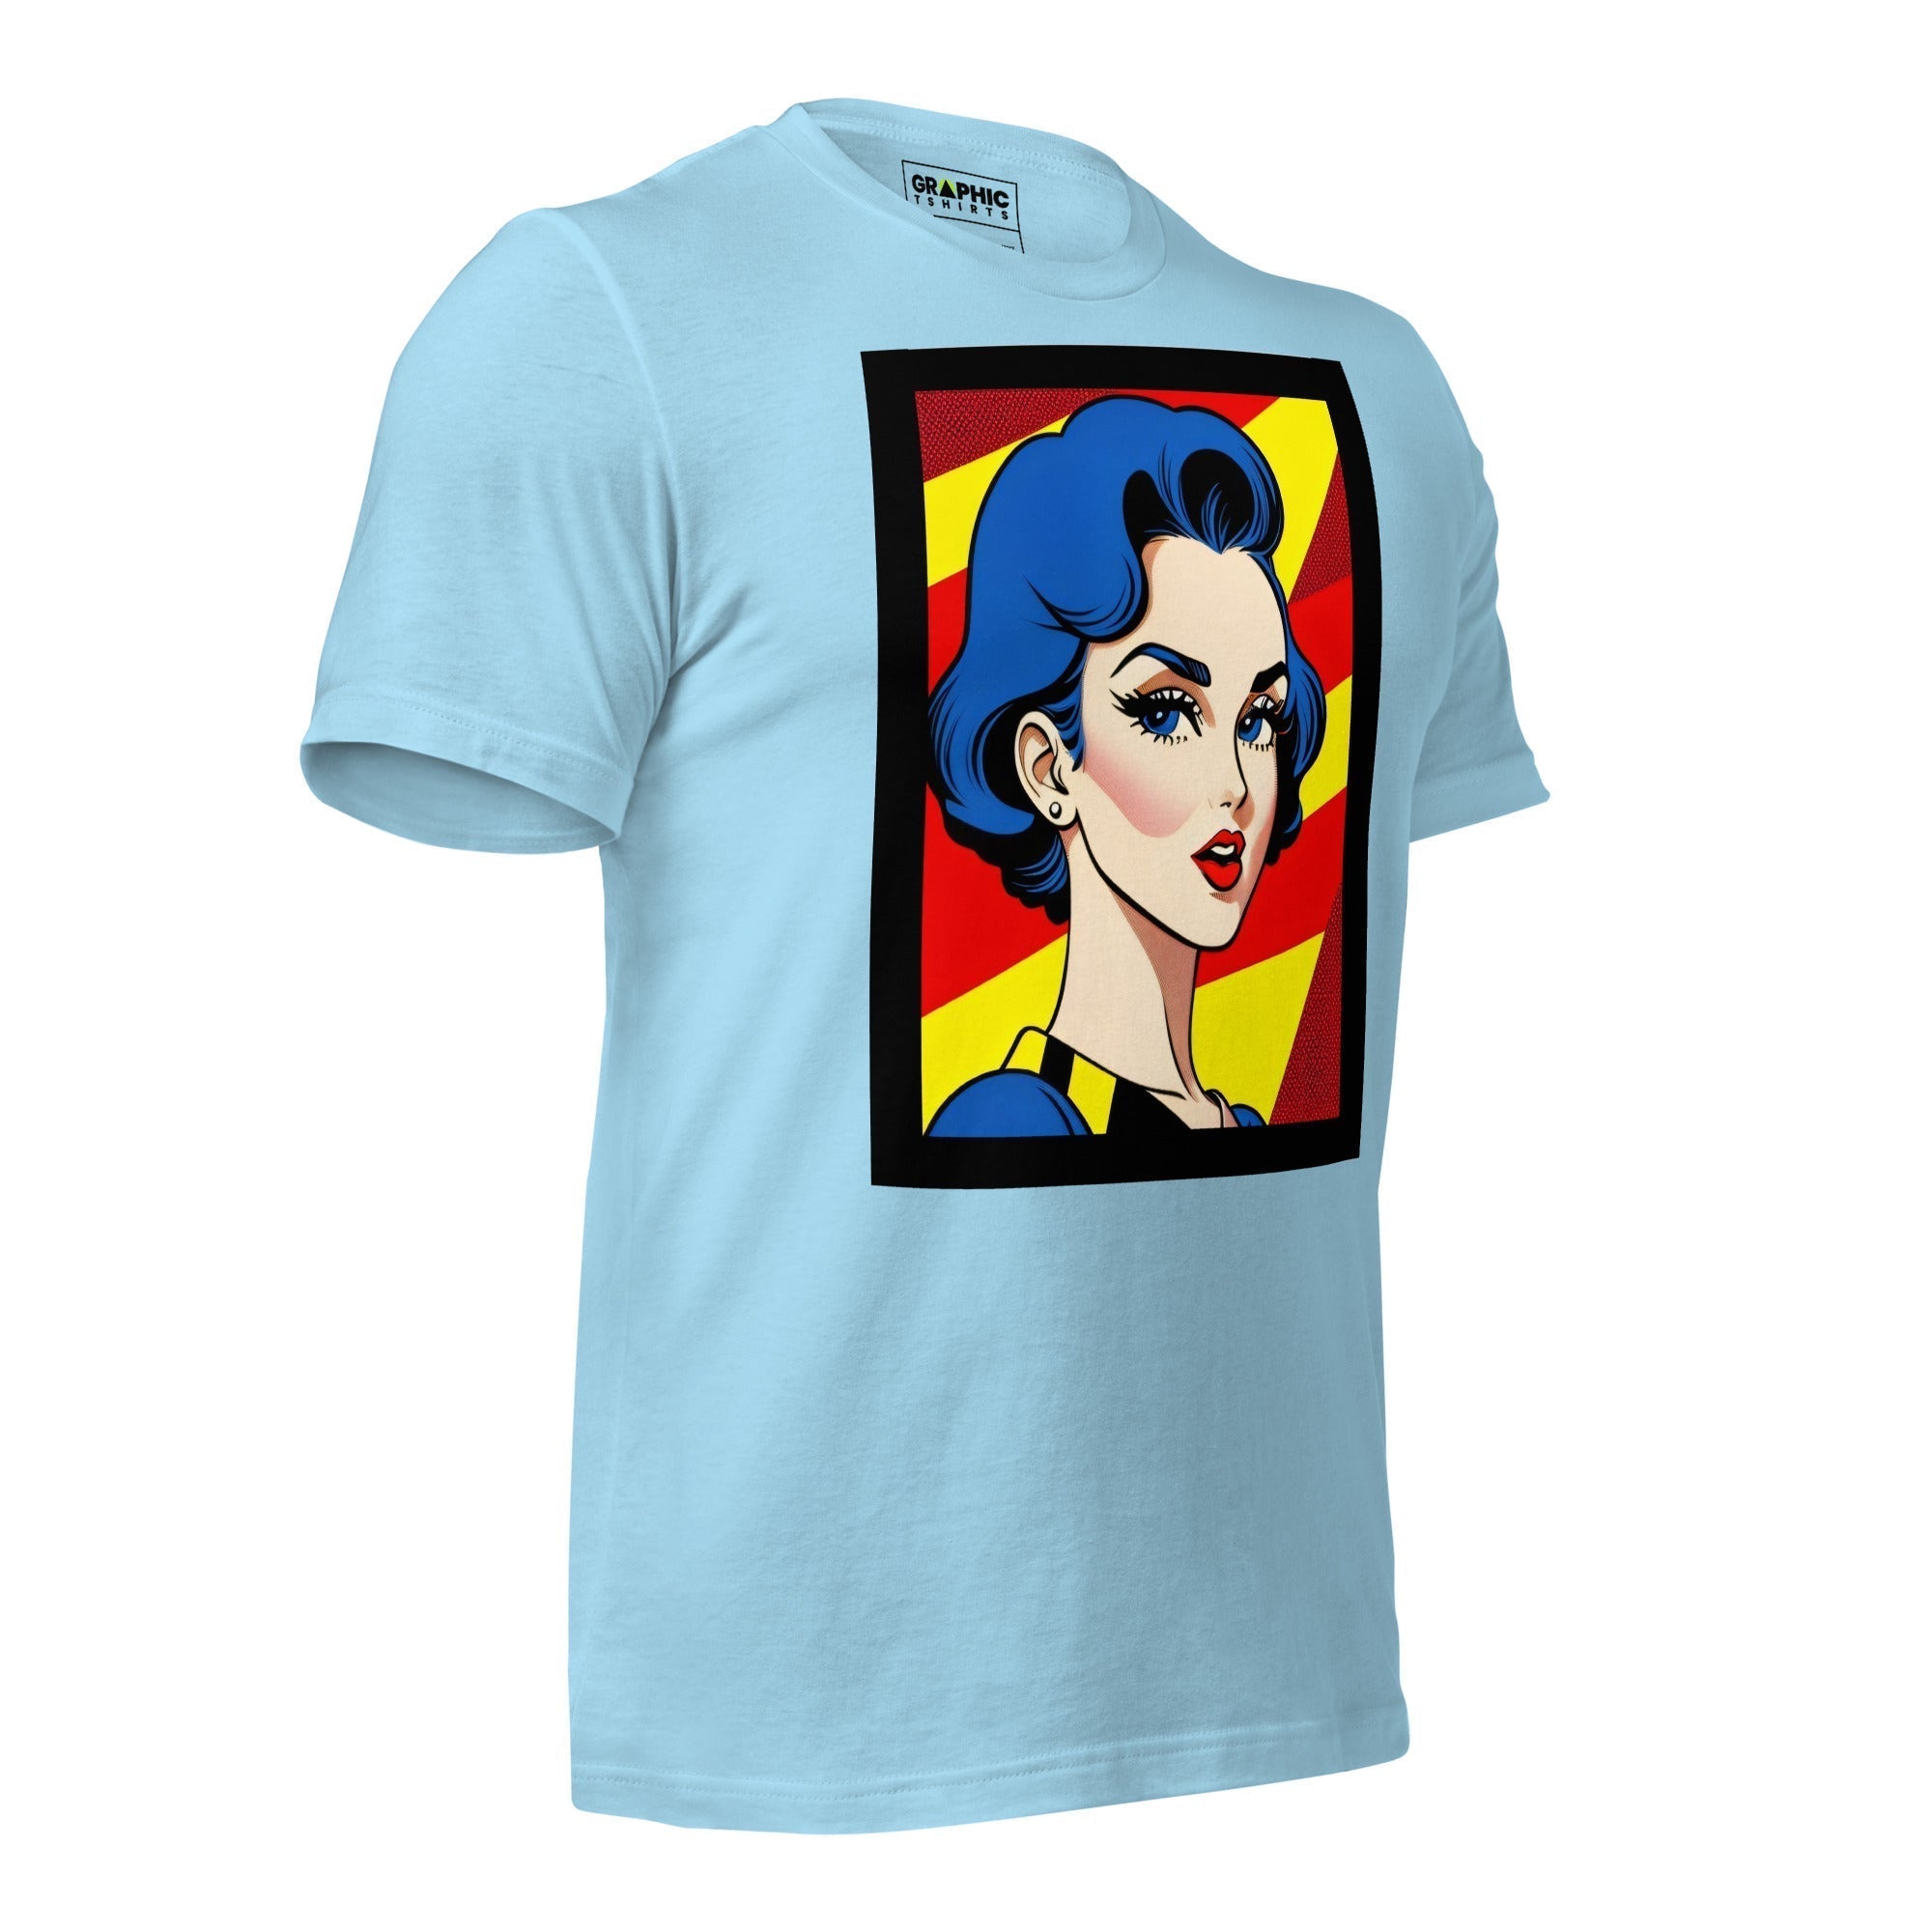 Unisex Crew Neck T-Shirt - Vintage American Comic Series v.24 - GRAPHIC T-SHIRTS